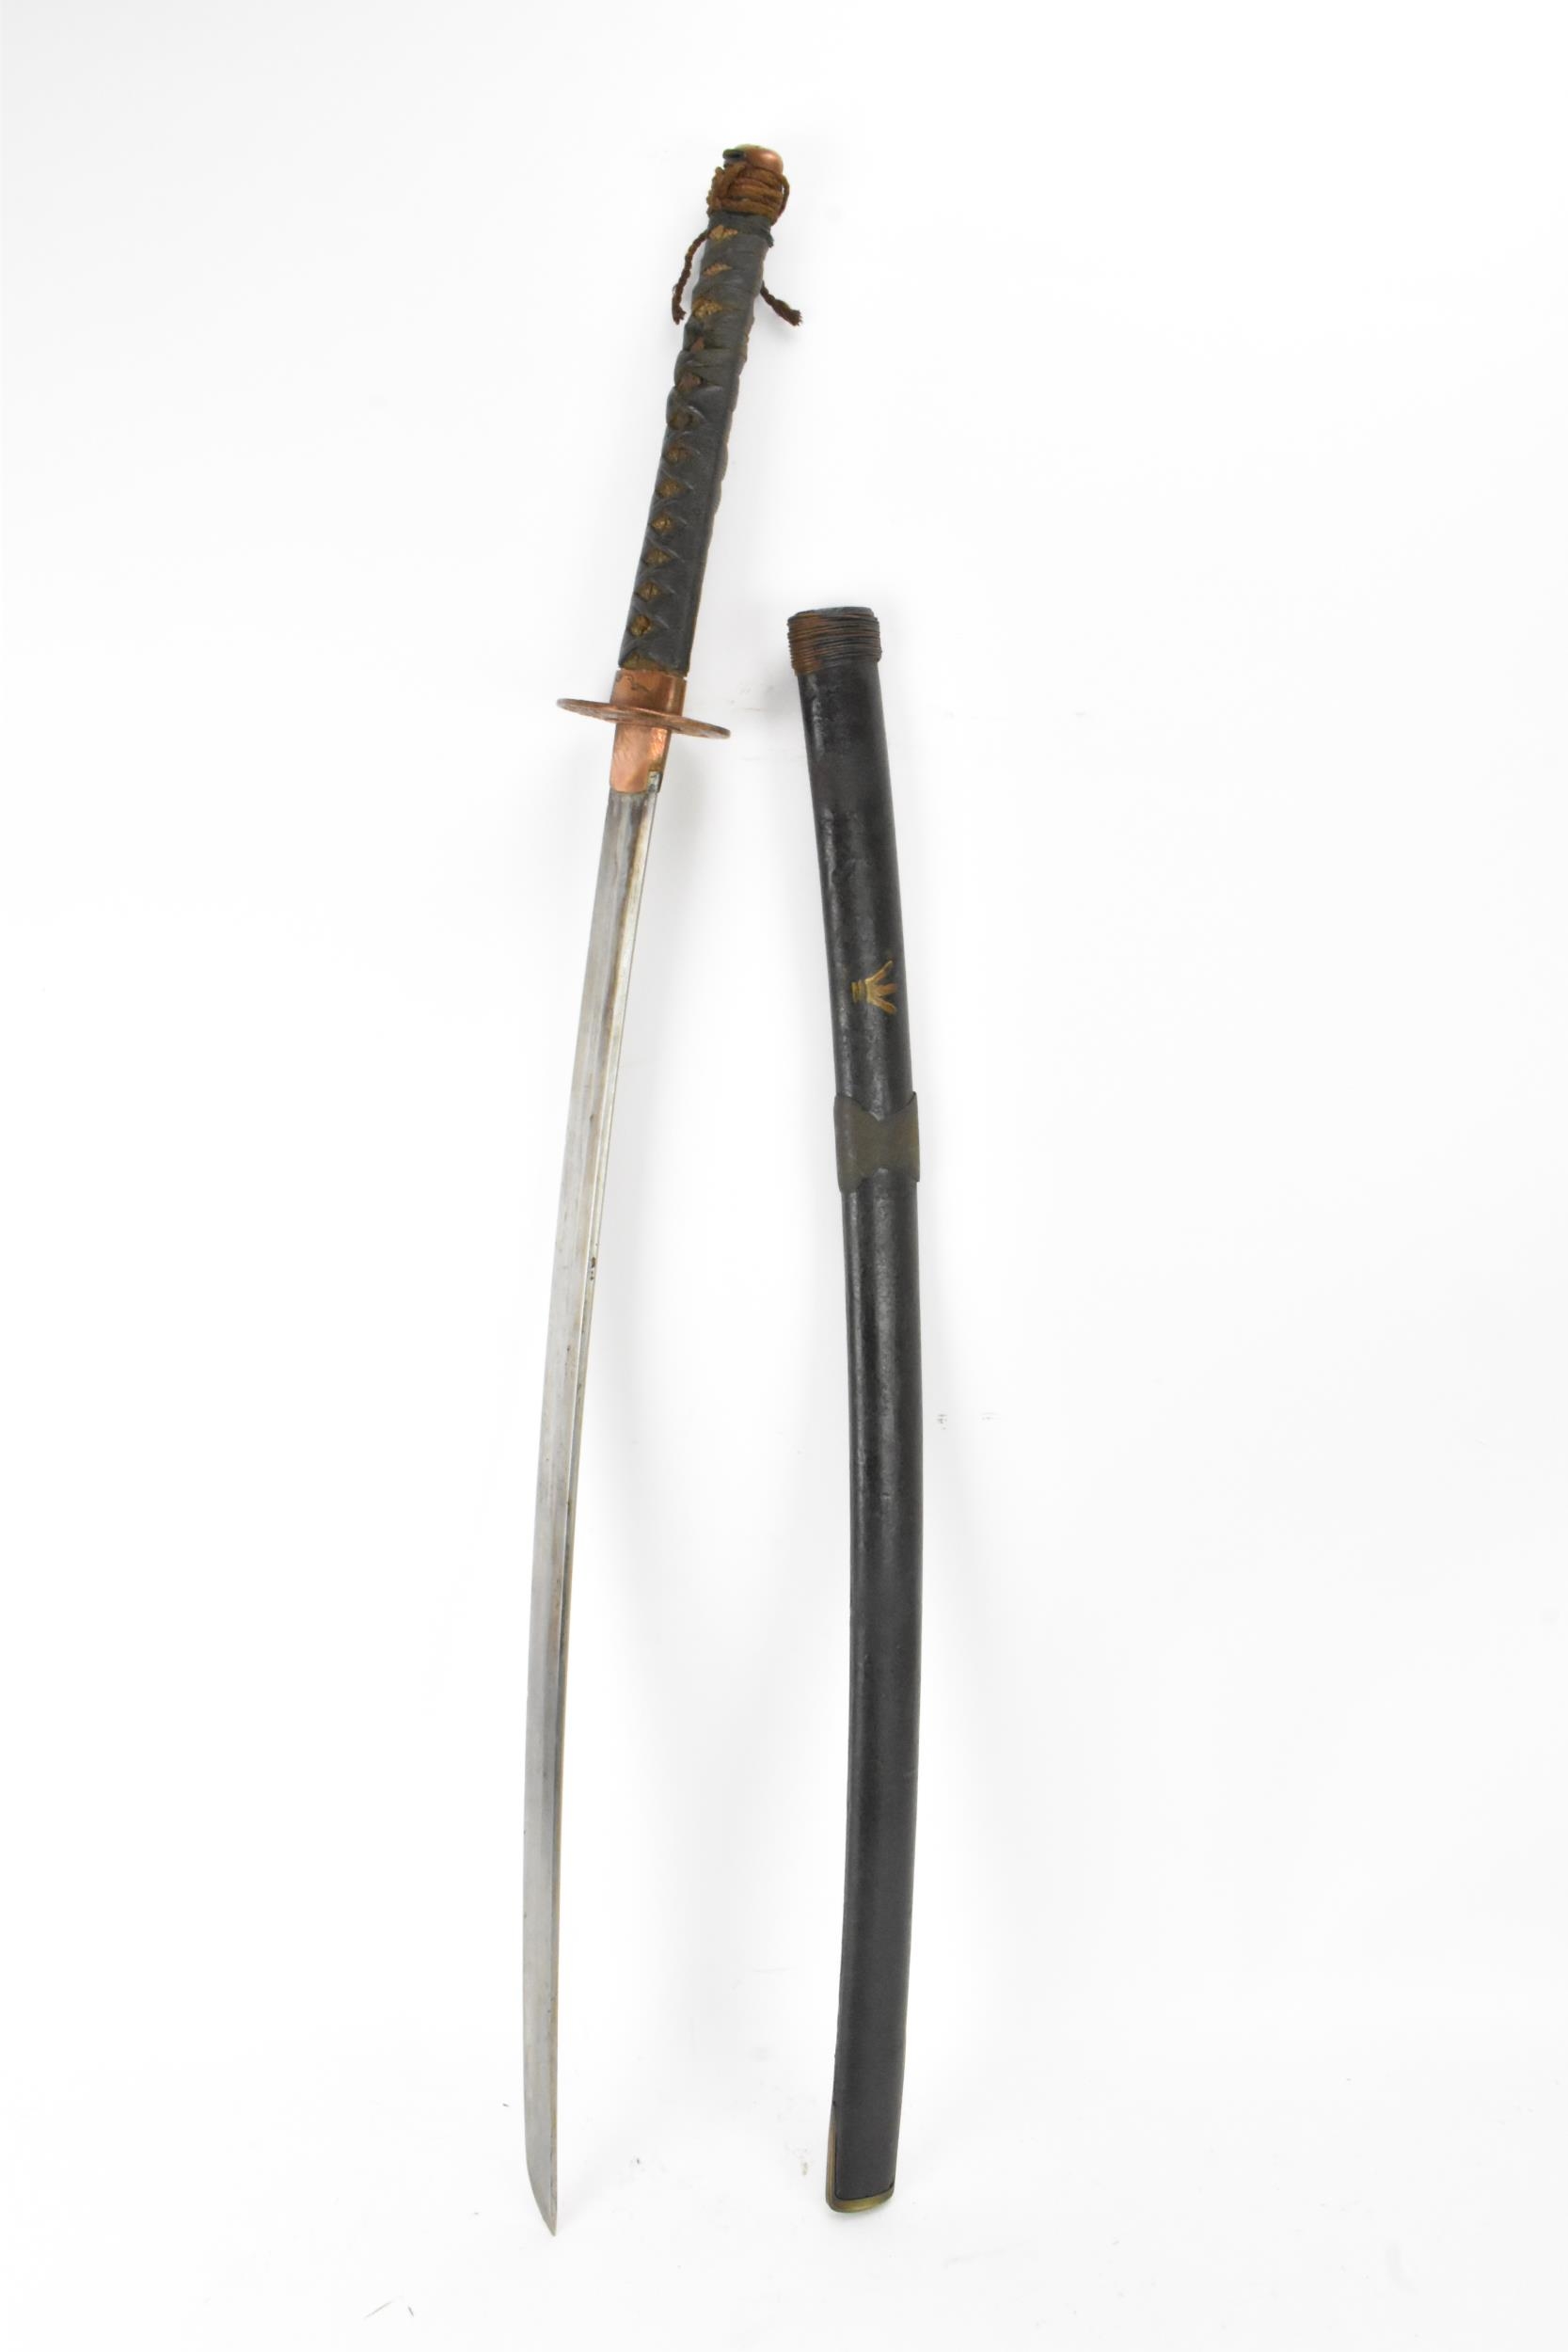 A Japanese Edo period Katana sword by Kawabe Suishinshi Masahide, circa 1750-1825, blade forged